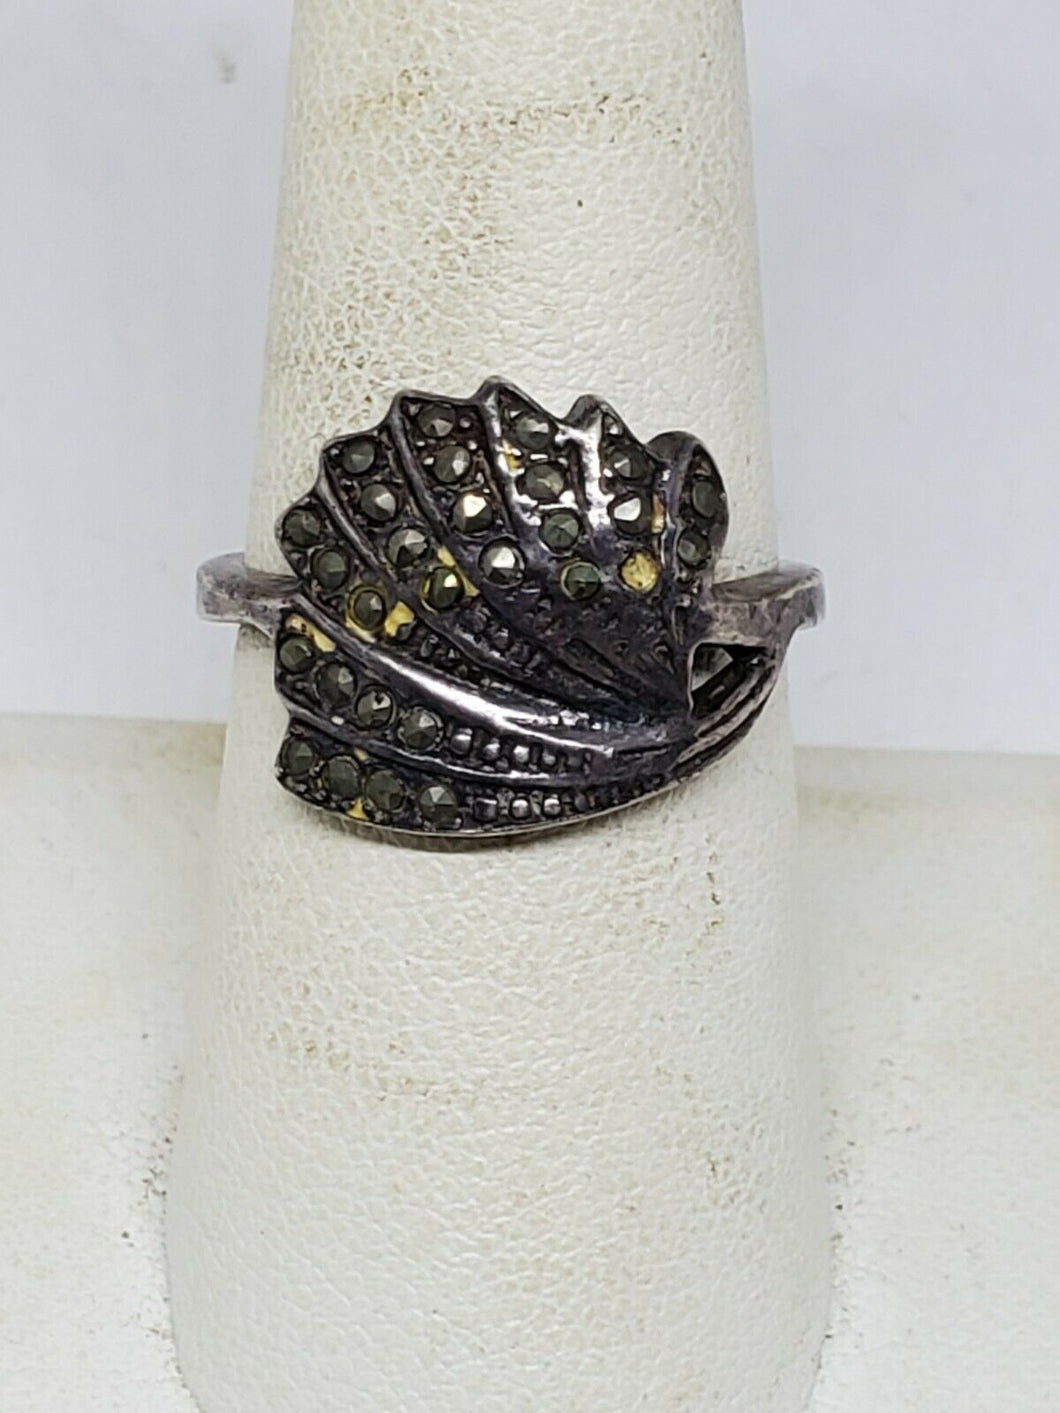 Vintage Sterling Silver Marcasite Fanned Design Ring Size 7 1/2